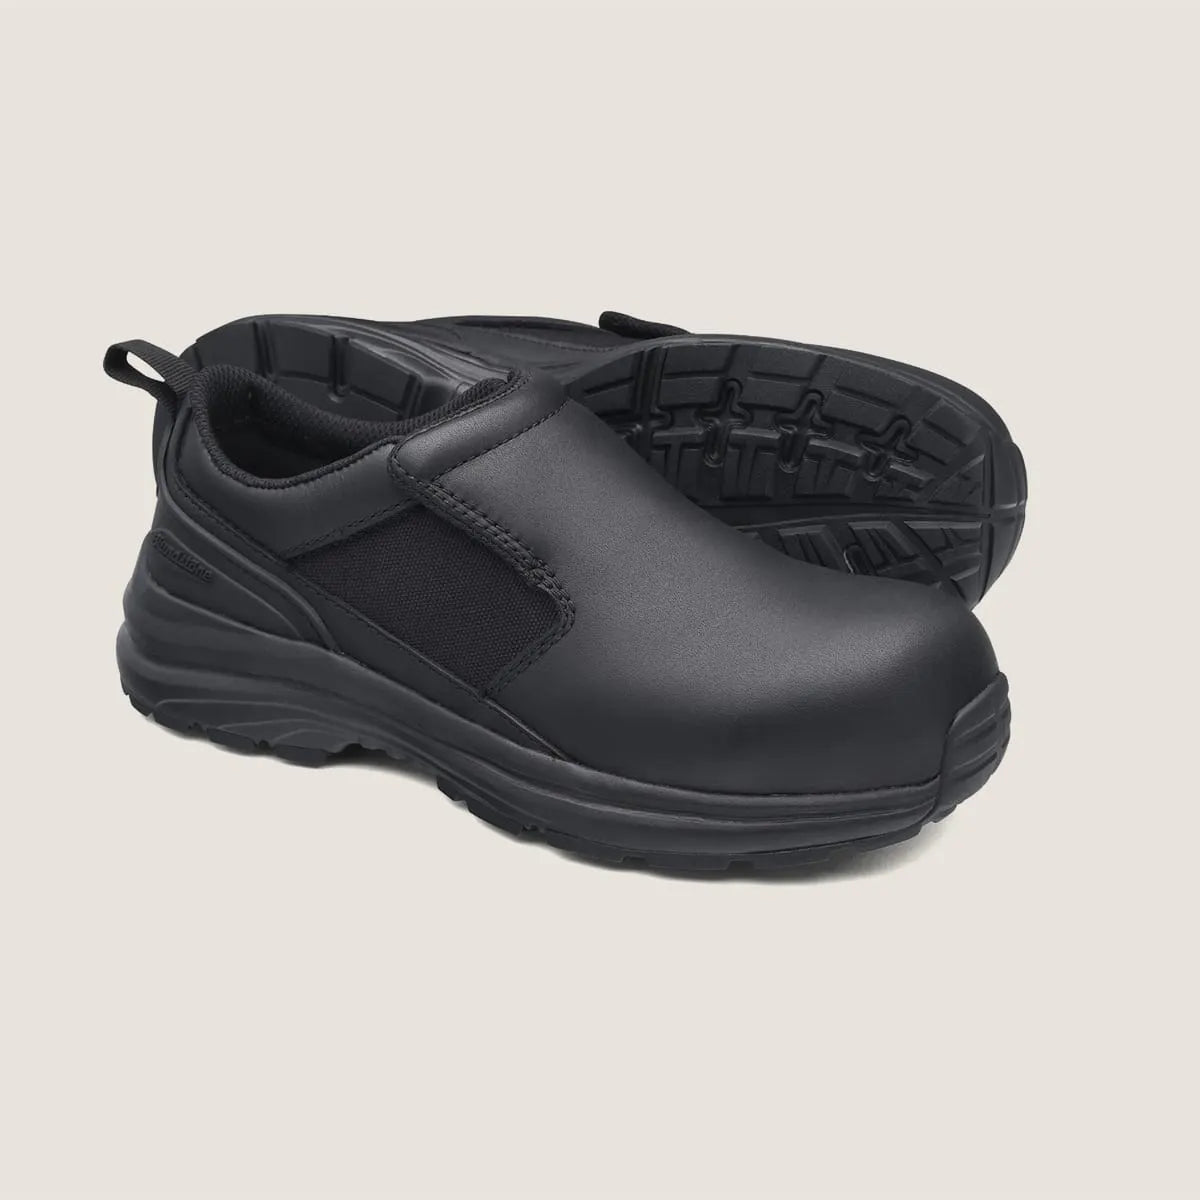 Blundstone 886 Women's Composite Slip On Safety Shoe-Black